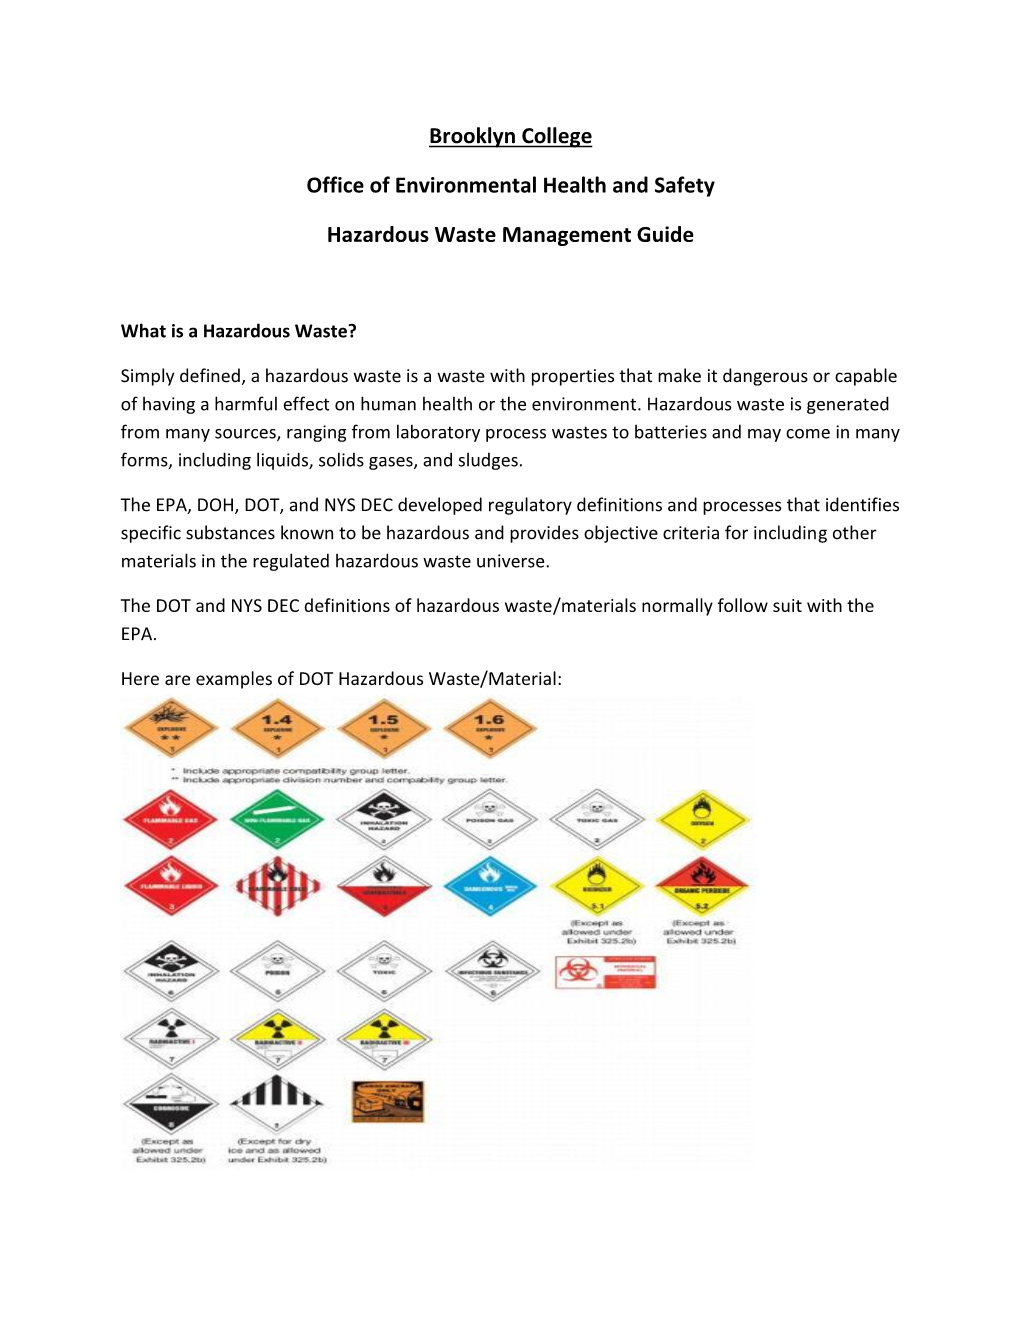 Chemical and Hazardous Waste Management